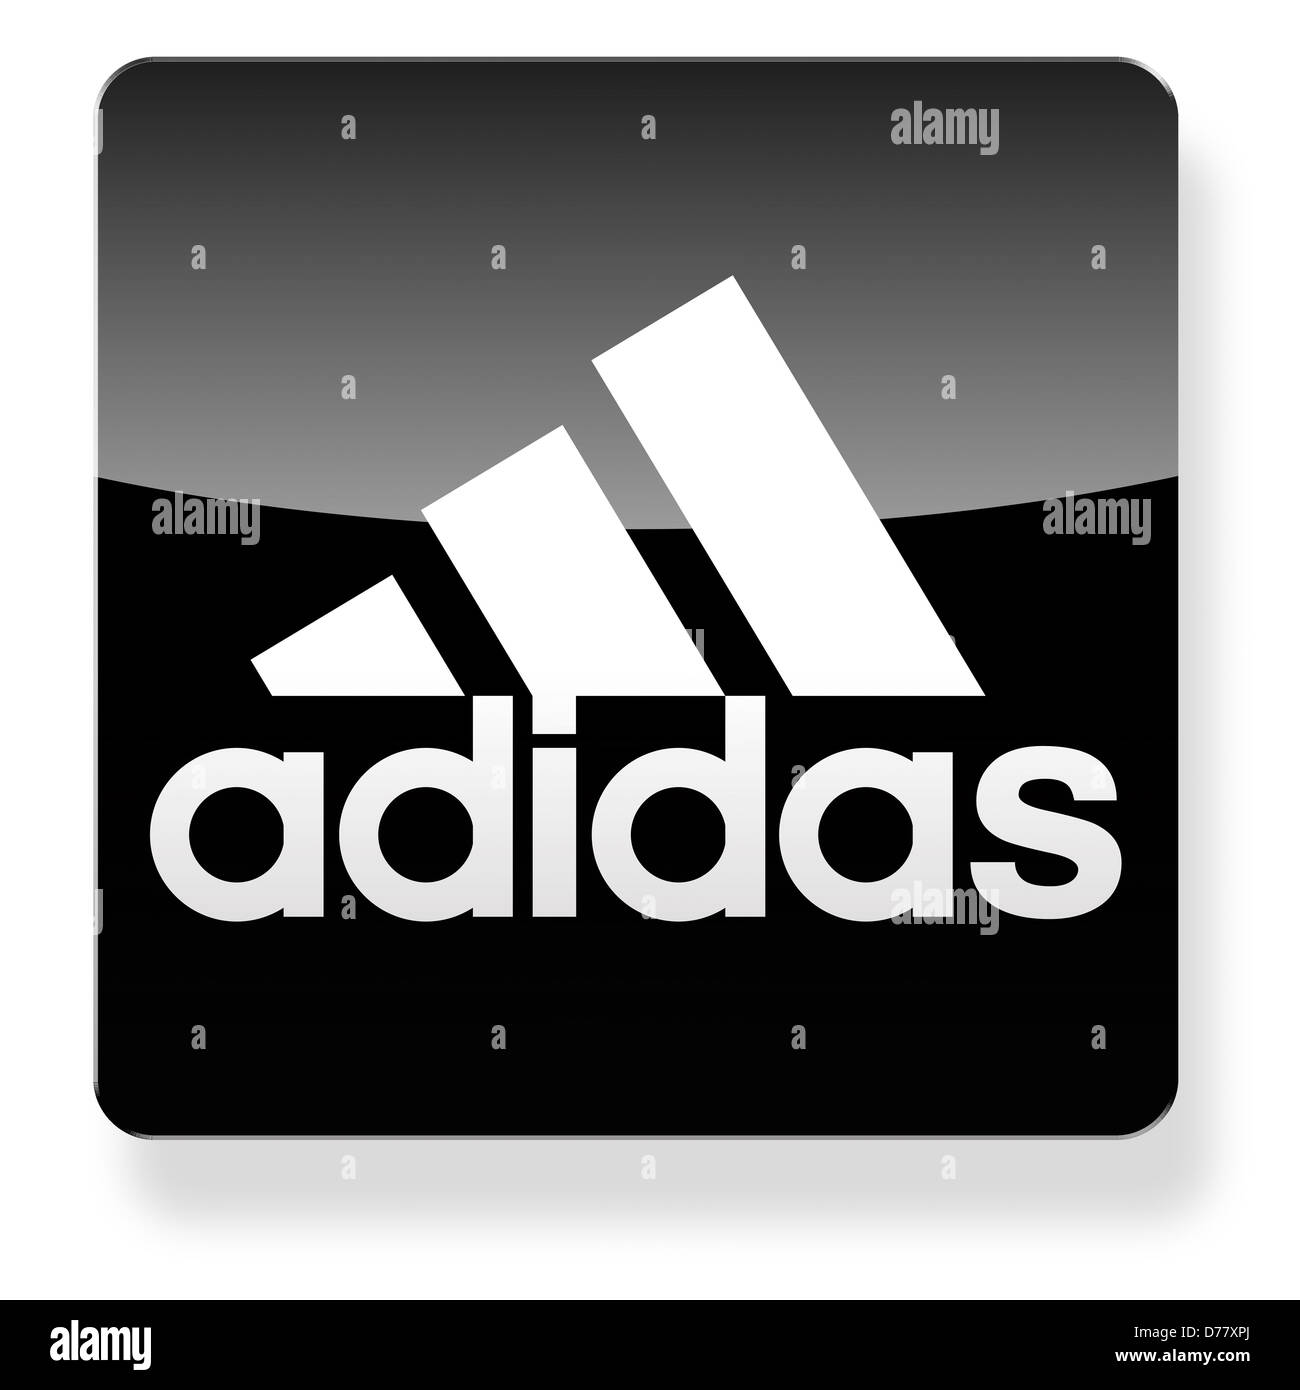 Adidas descarga gratuita de png  Adidas Originals Logo de Dream League  Soccer Tres rayas  adidas imagen png  imagen transparente descarga  gratuita